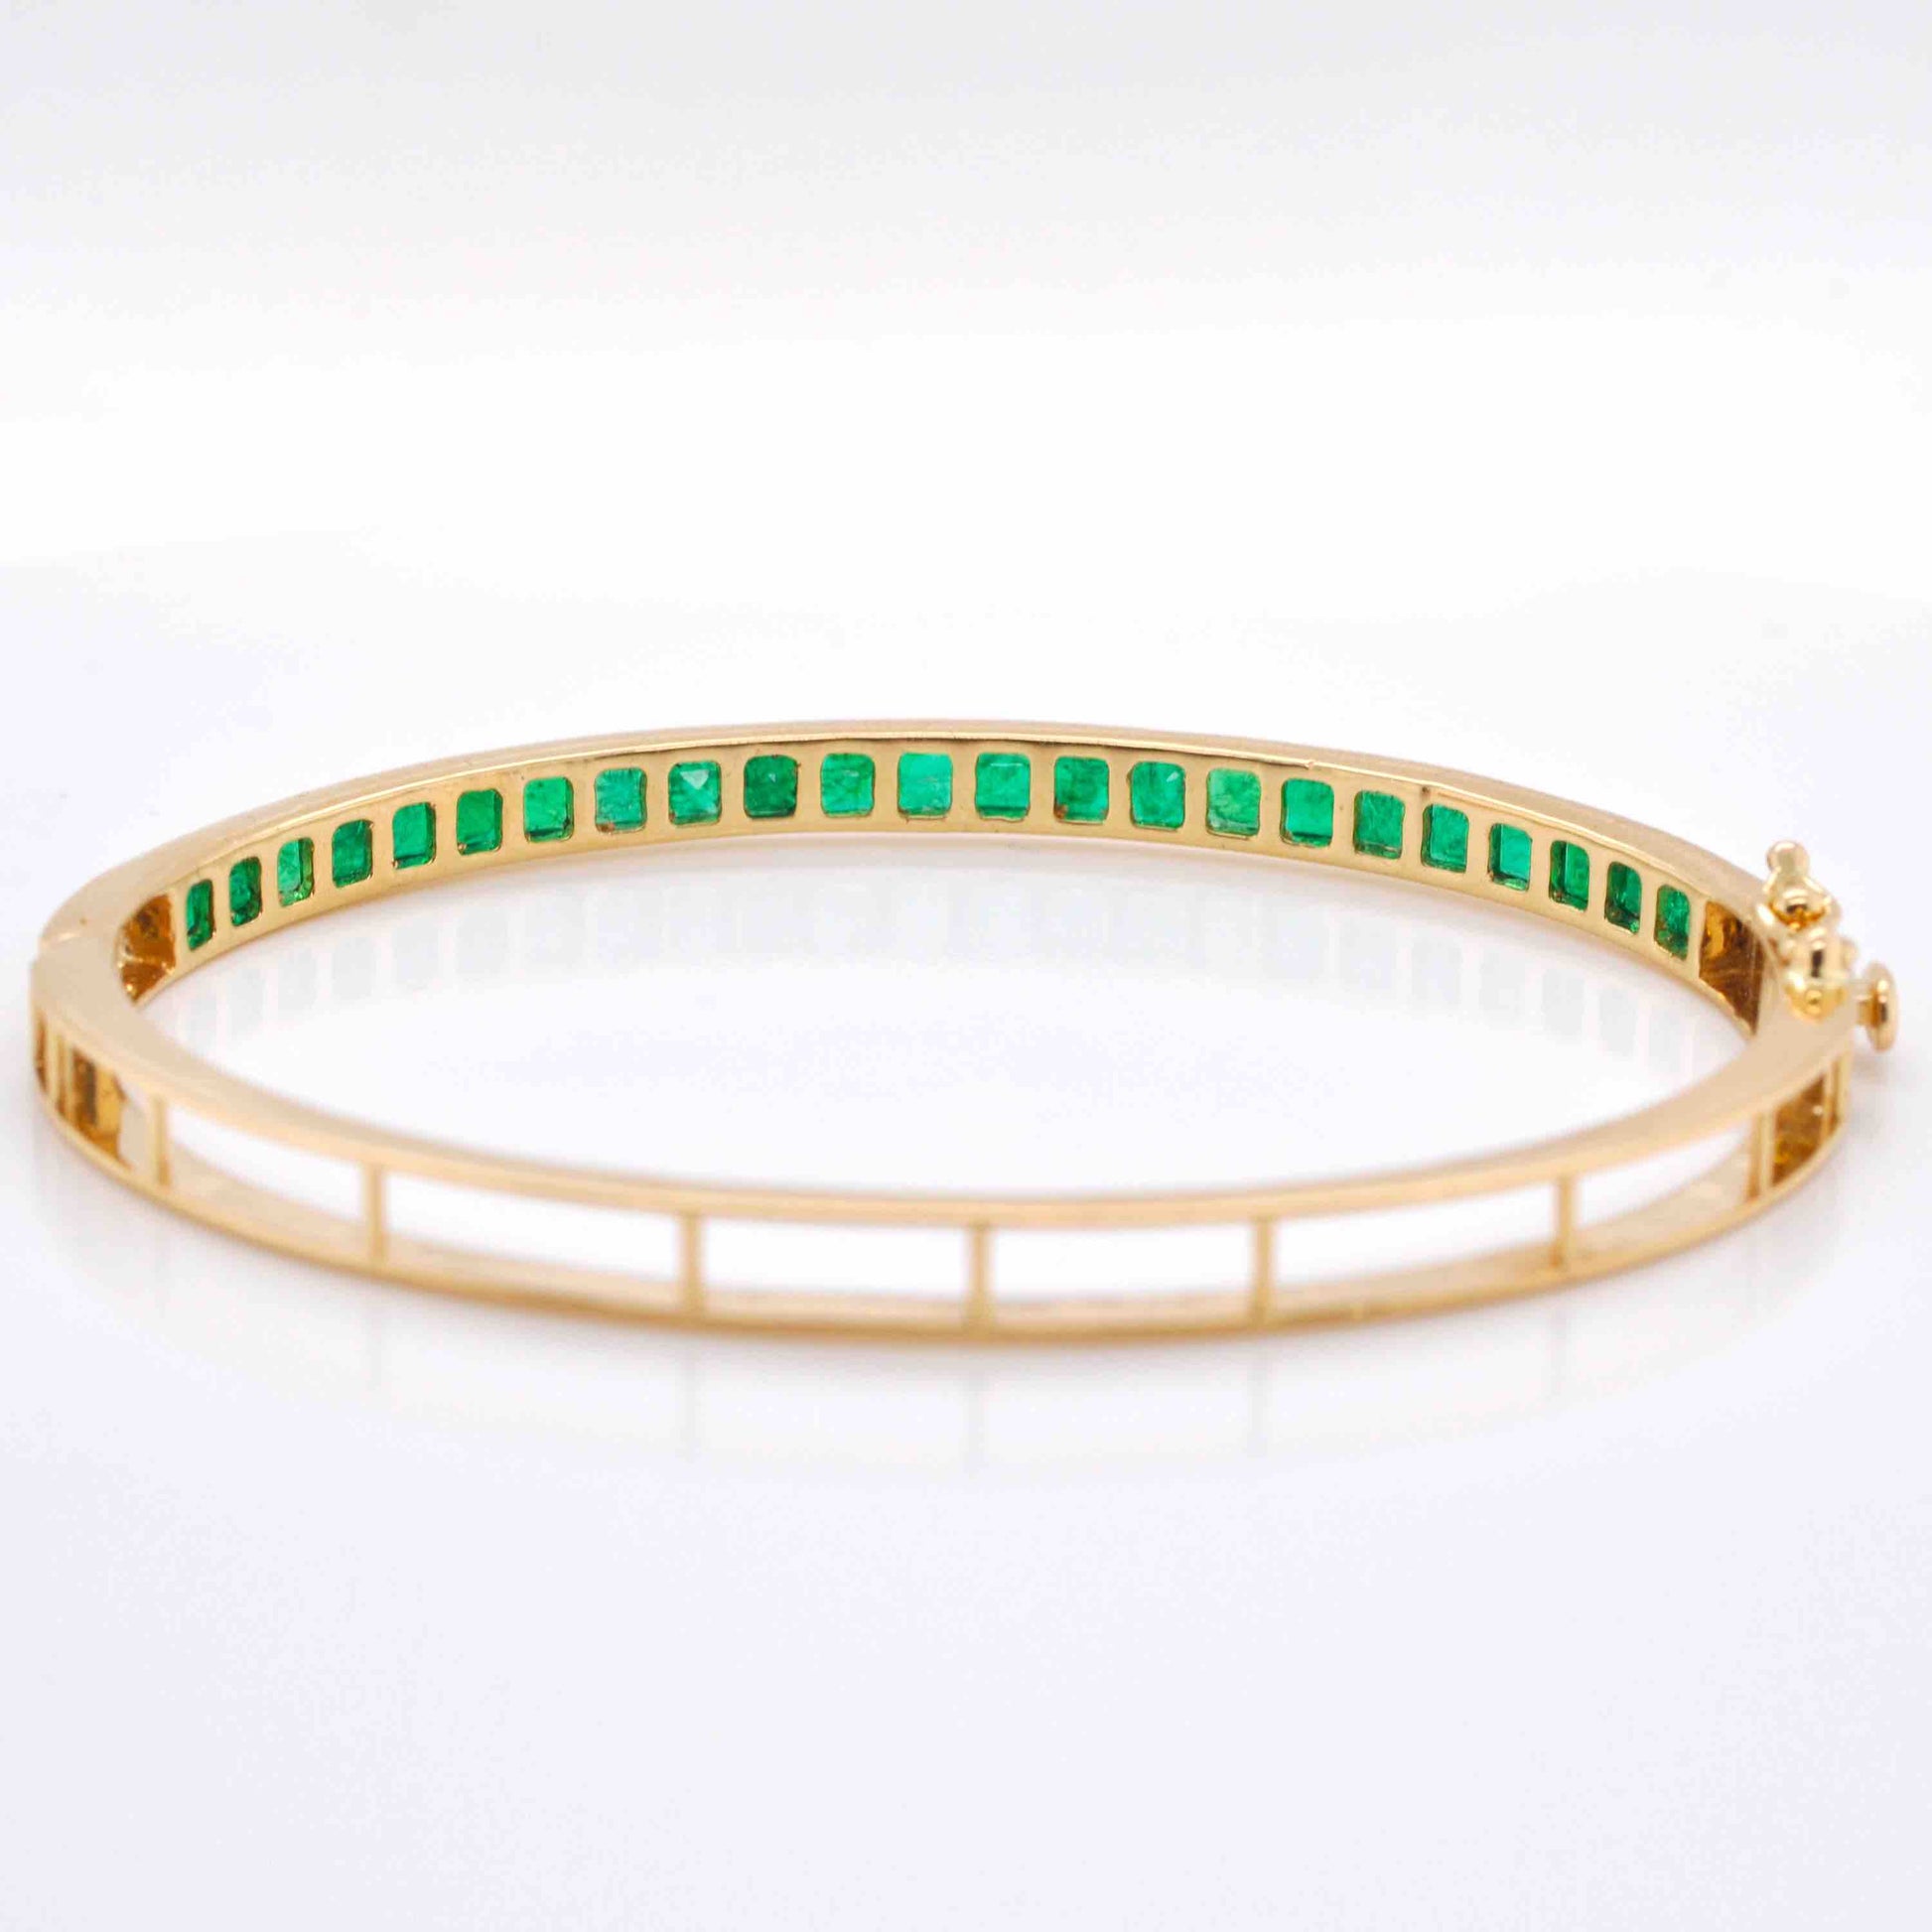 Classic emerald wristband